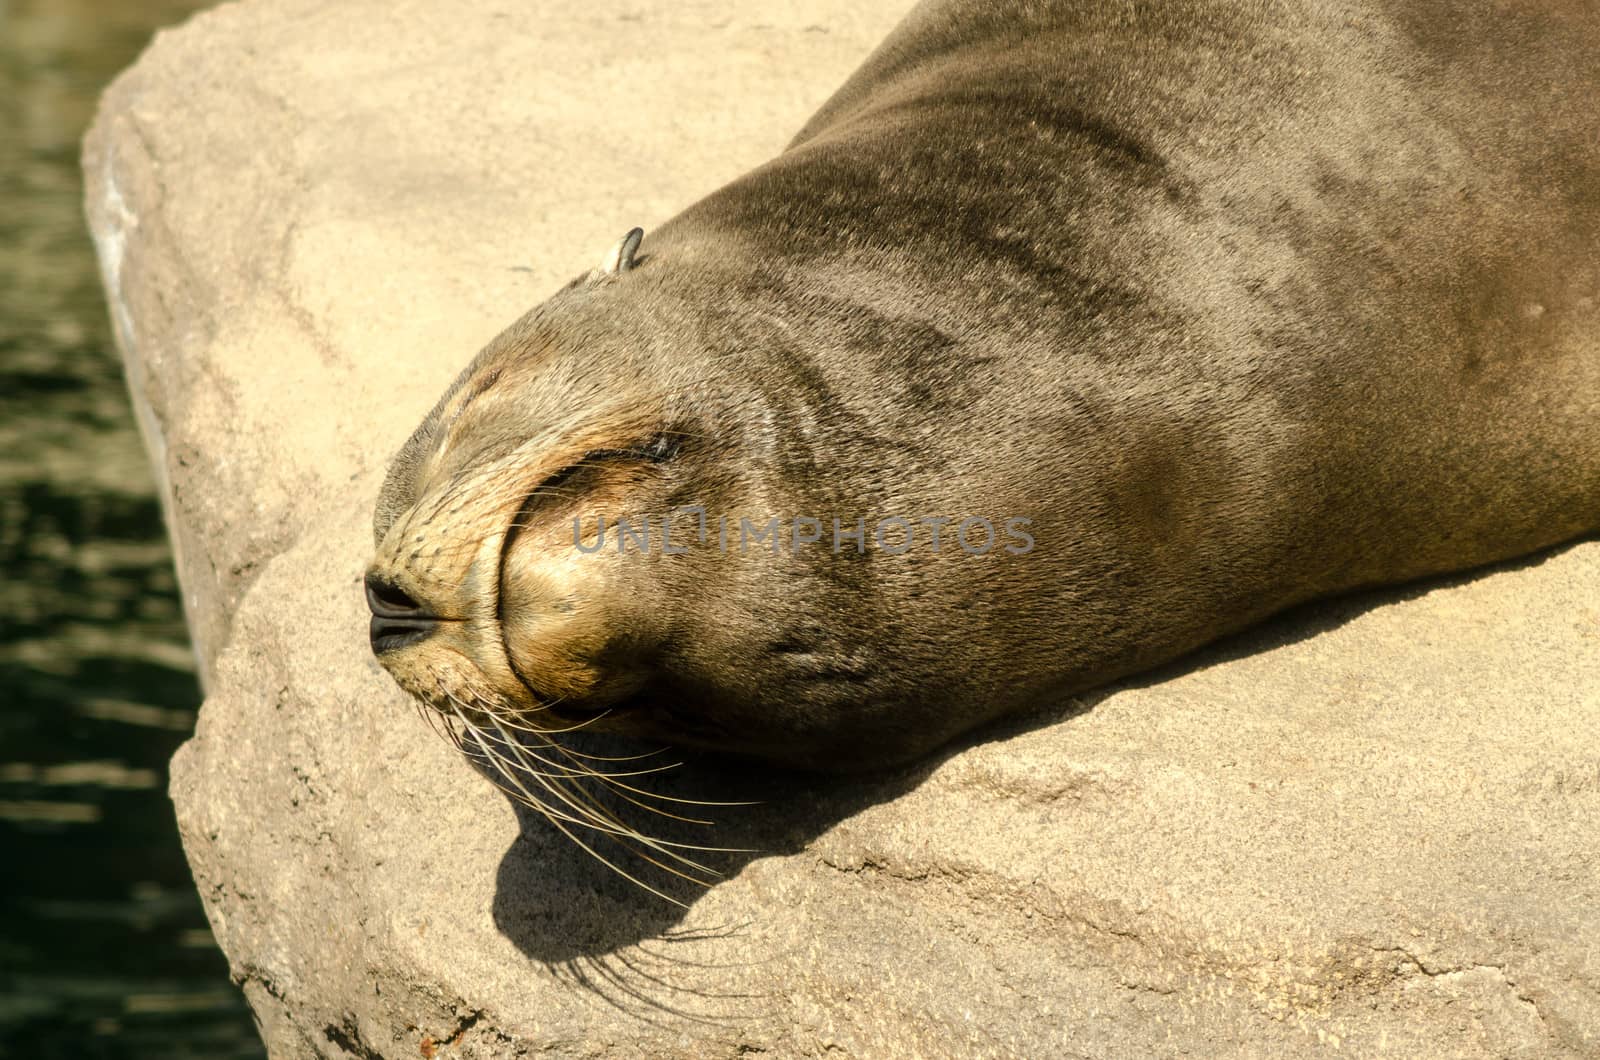 Closeup of the face of a sunbathing sea lion